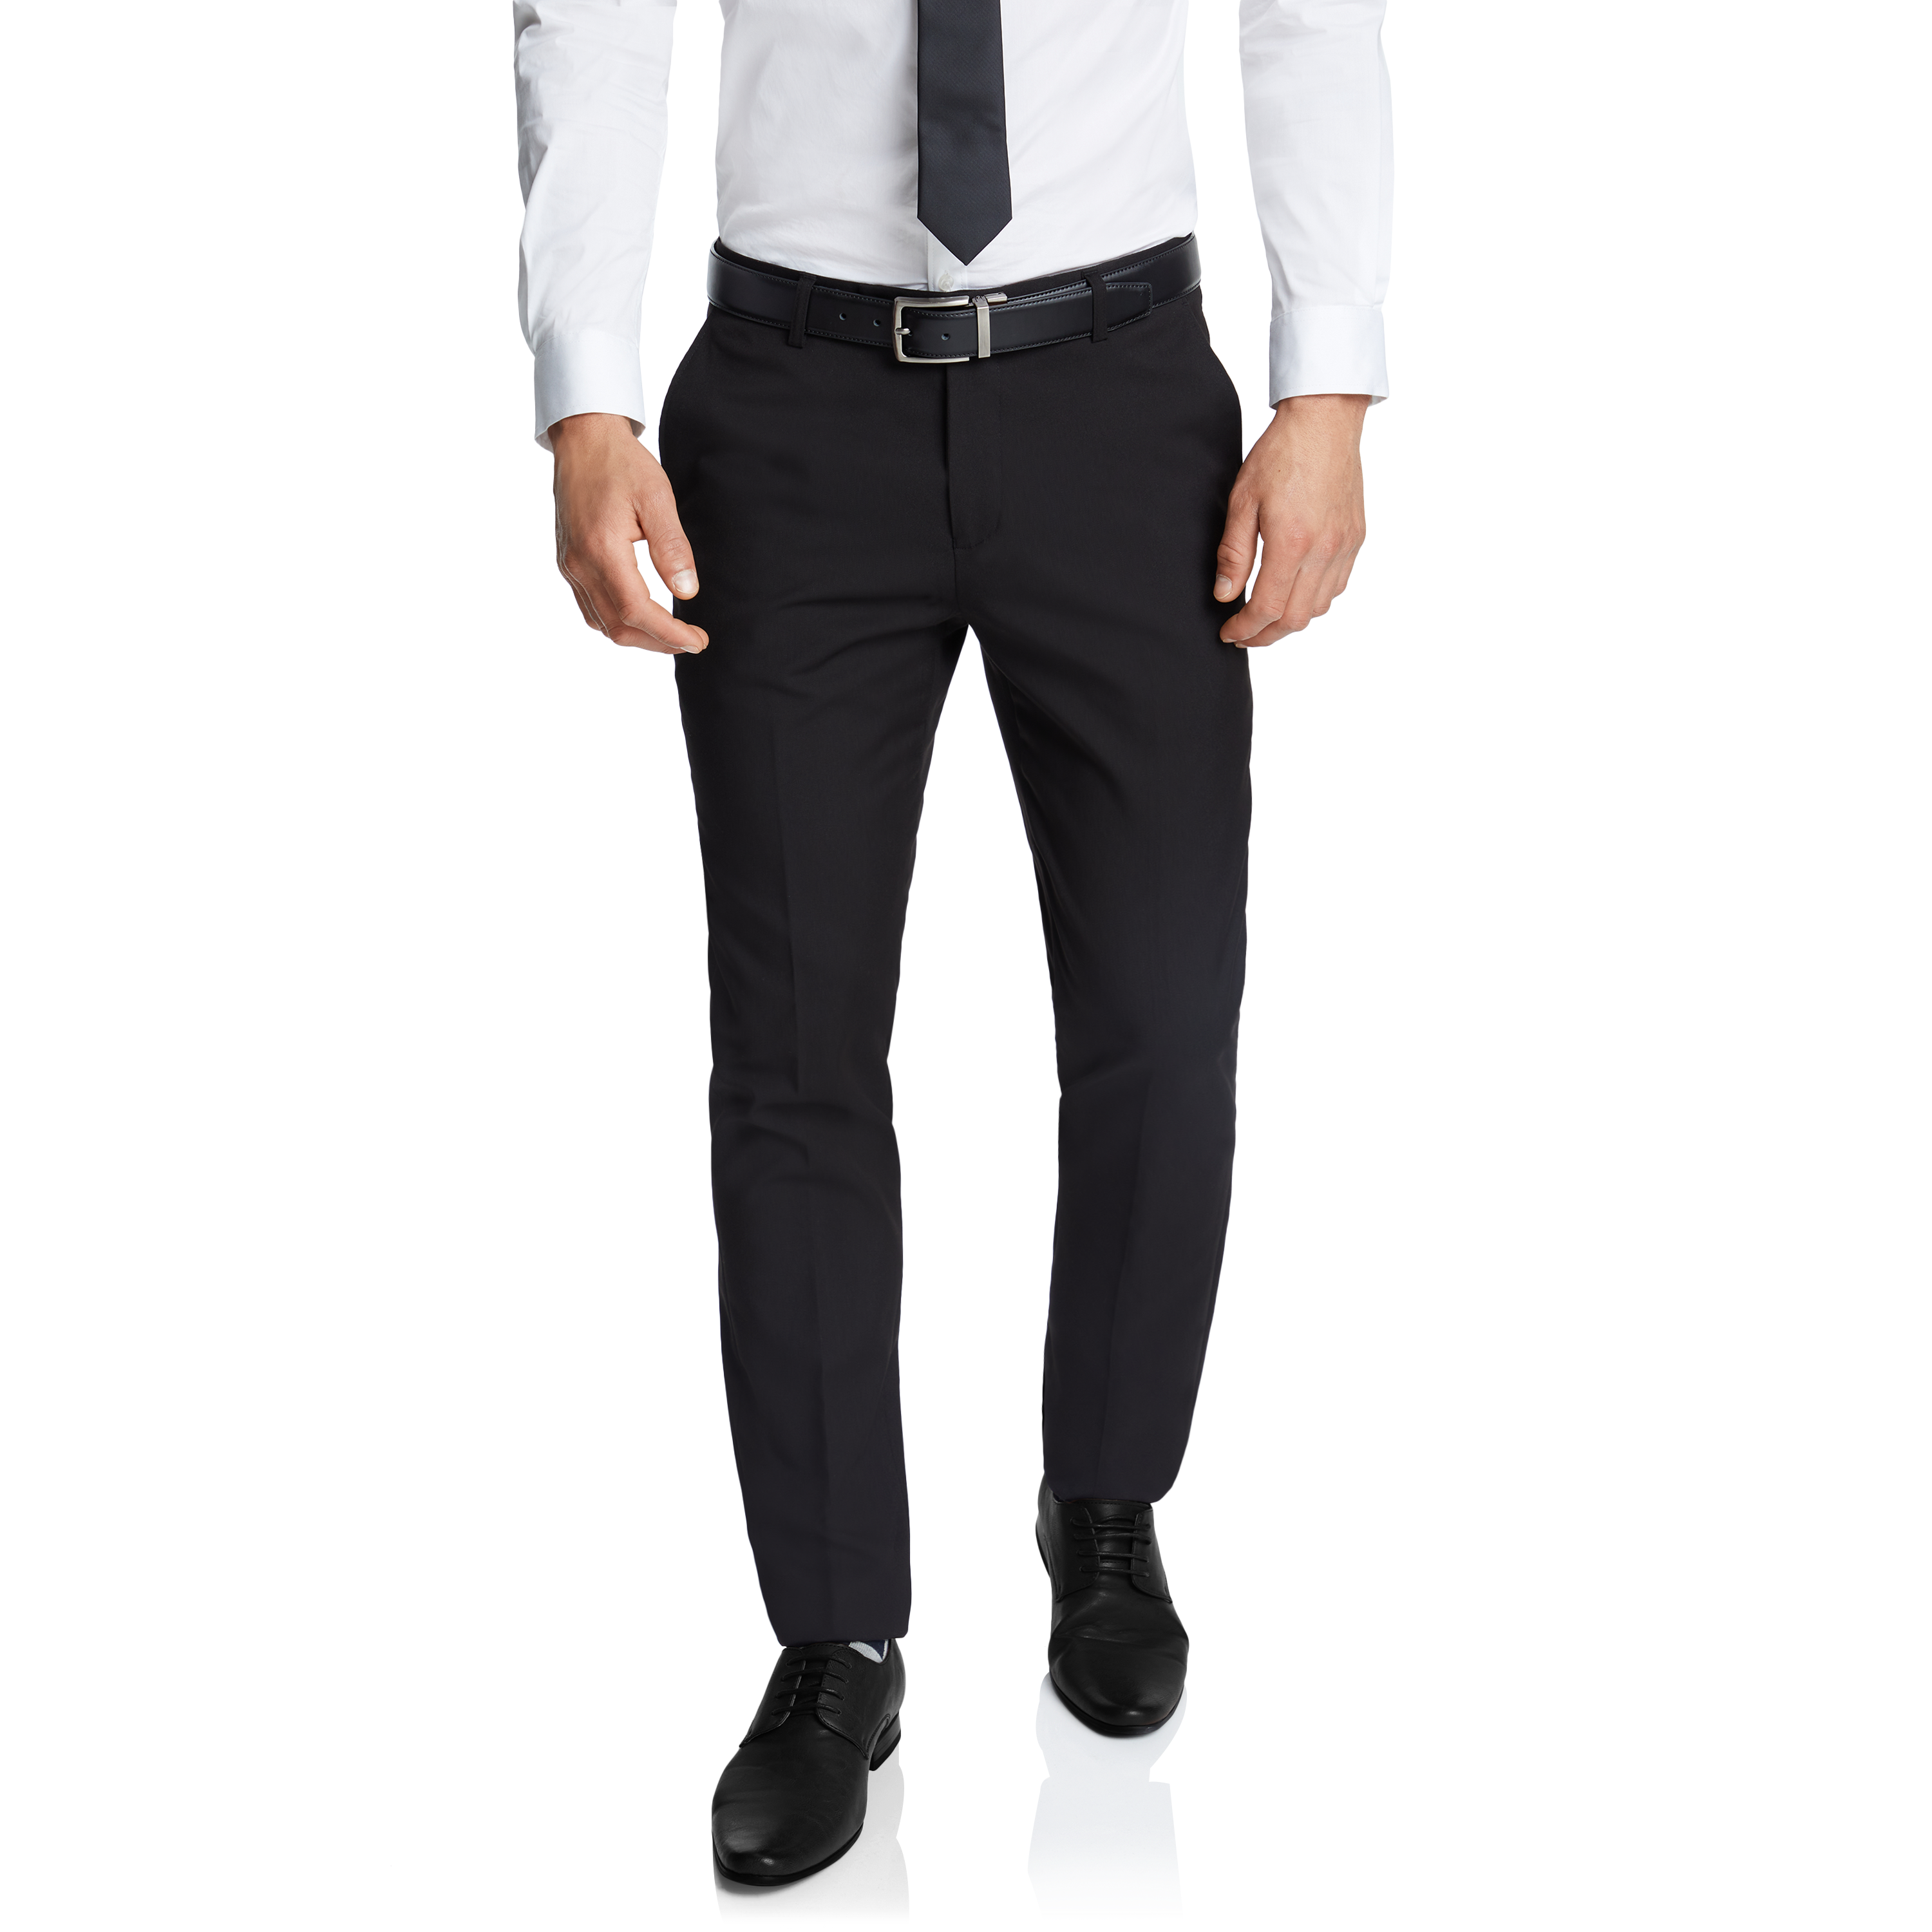 Avani Black Suit Trousers  Trousers  PrettyLittleThing